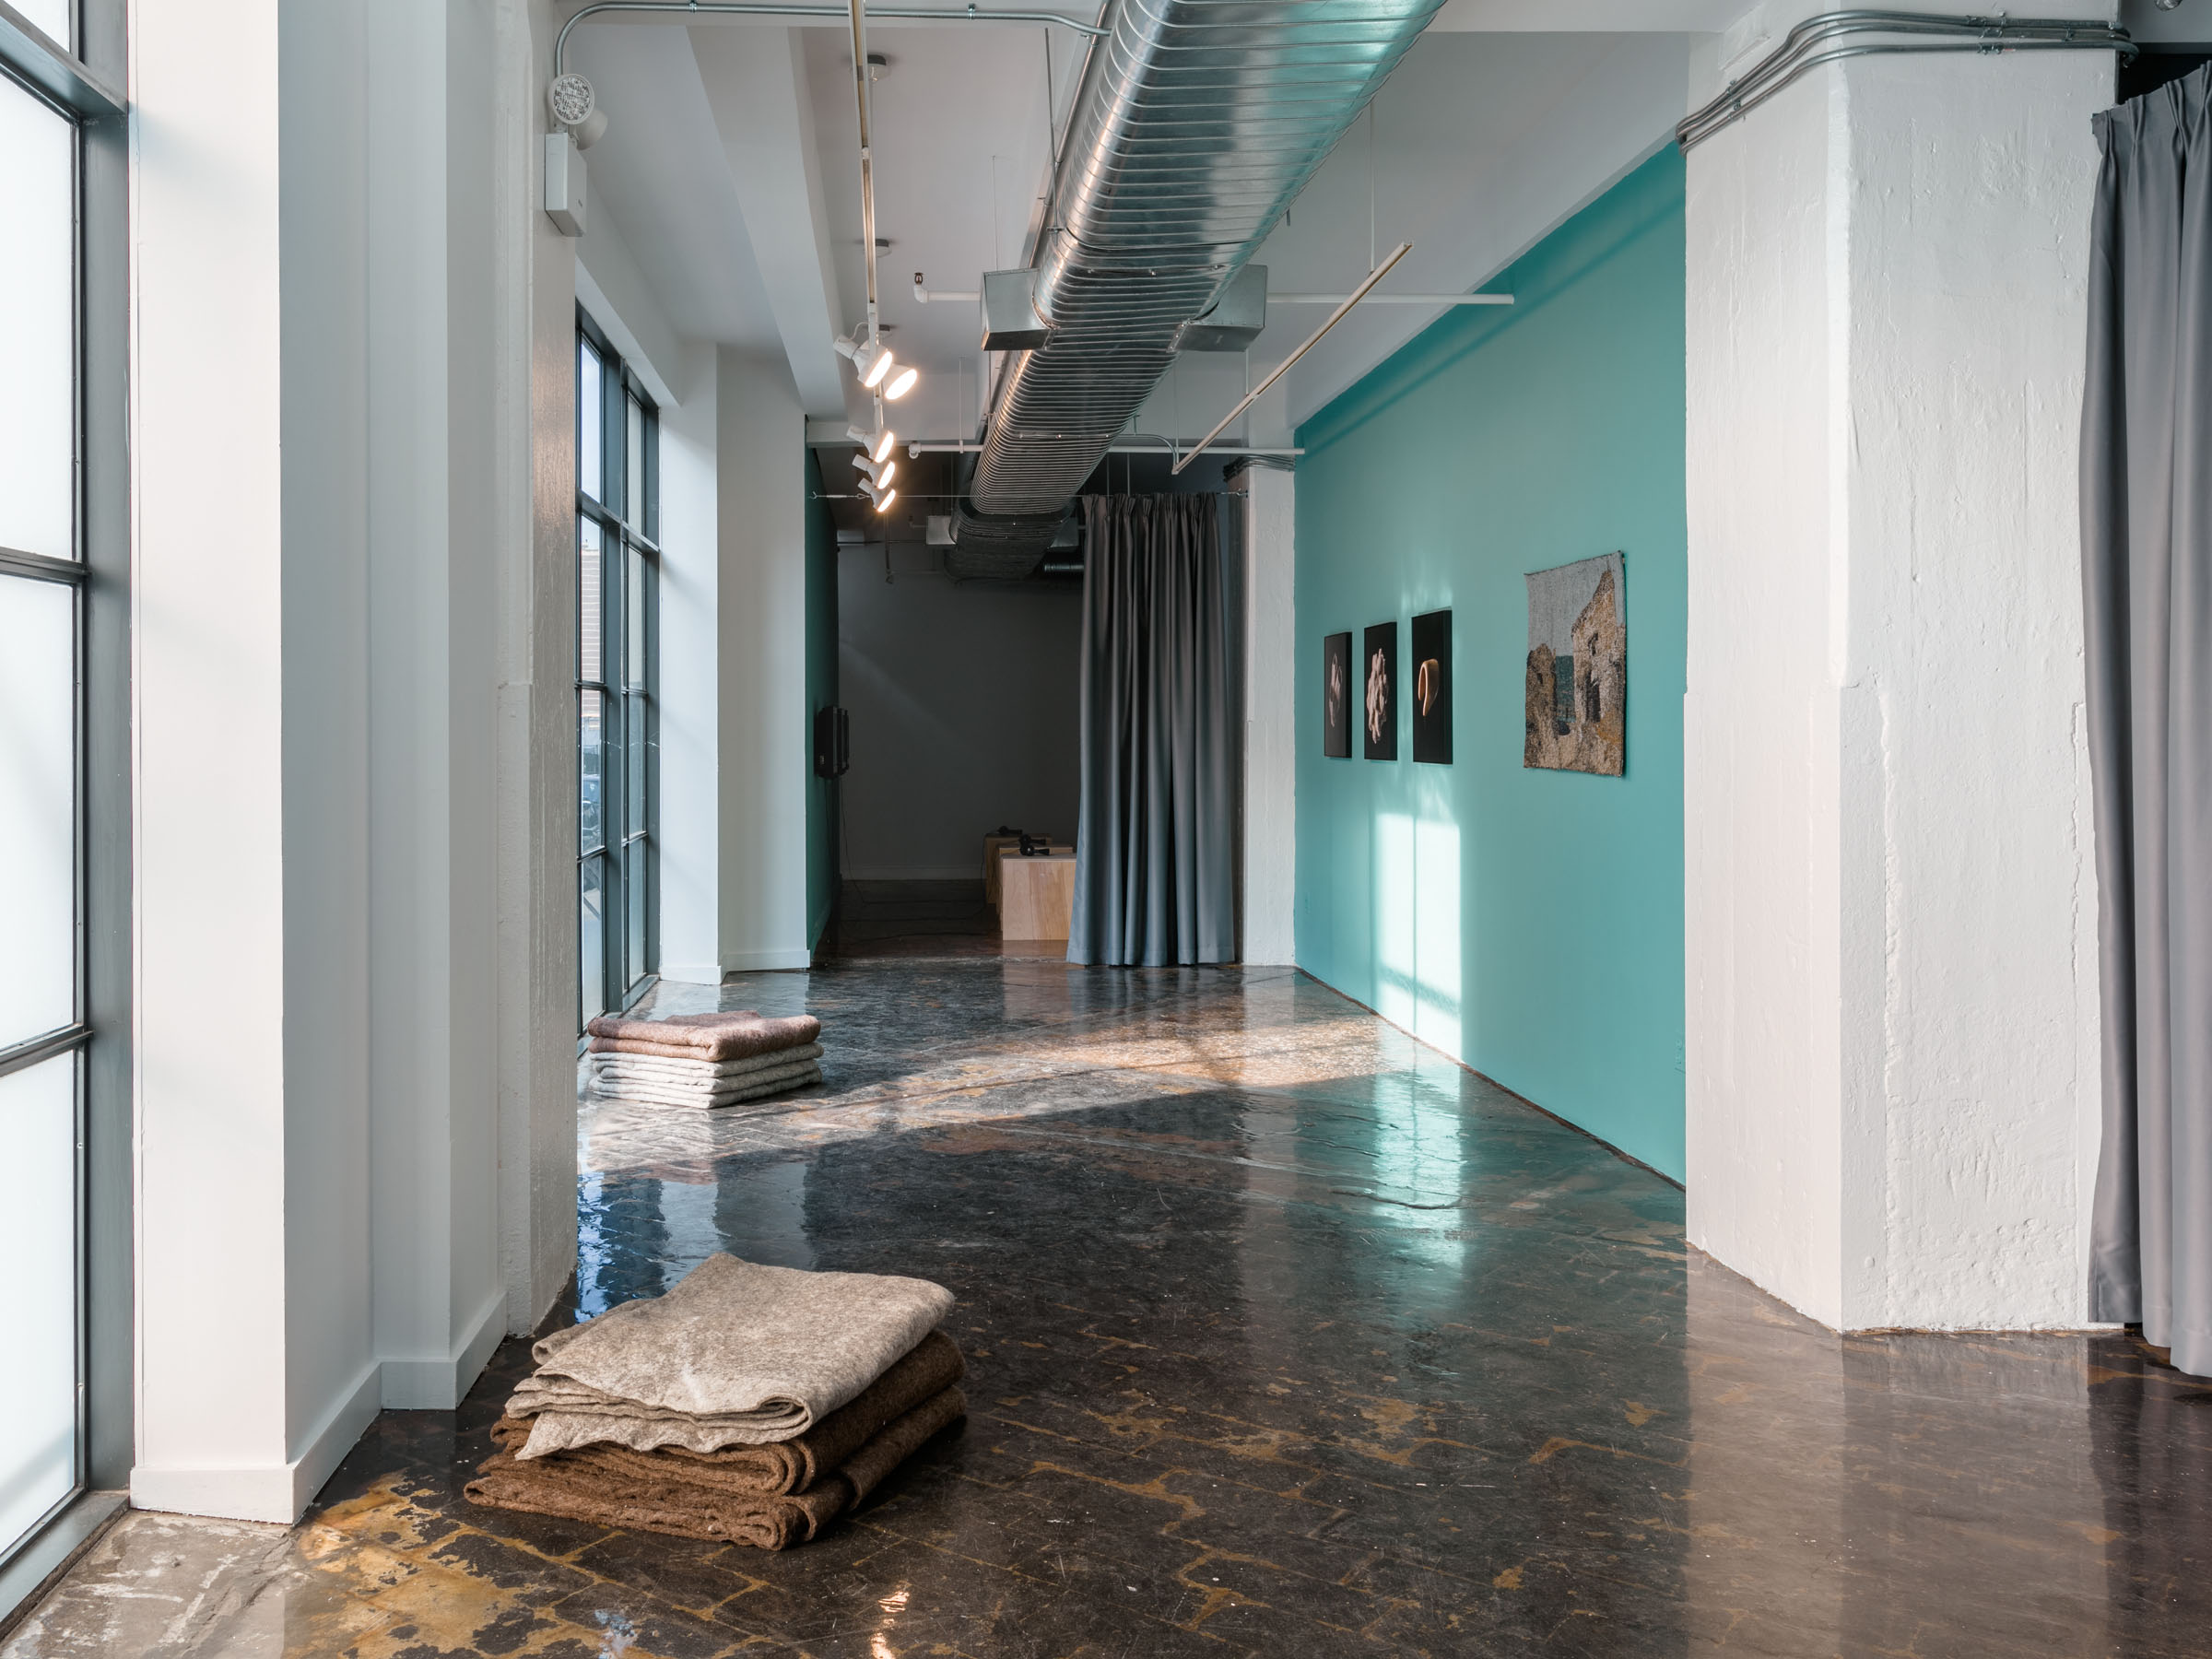 Ieva Epnere, "Sea of Living Memories" (installation view), 2016. Courtesy the artist, Art in General, and kim? Contemporary Art Centre. Photo: Charles Benton.